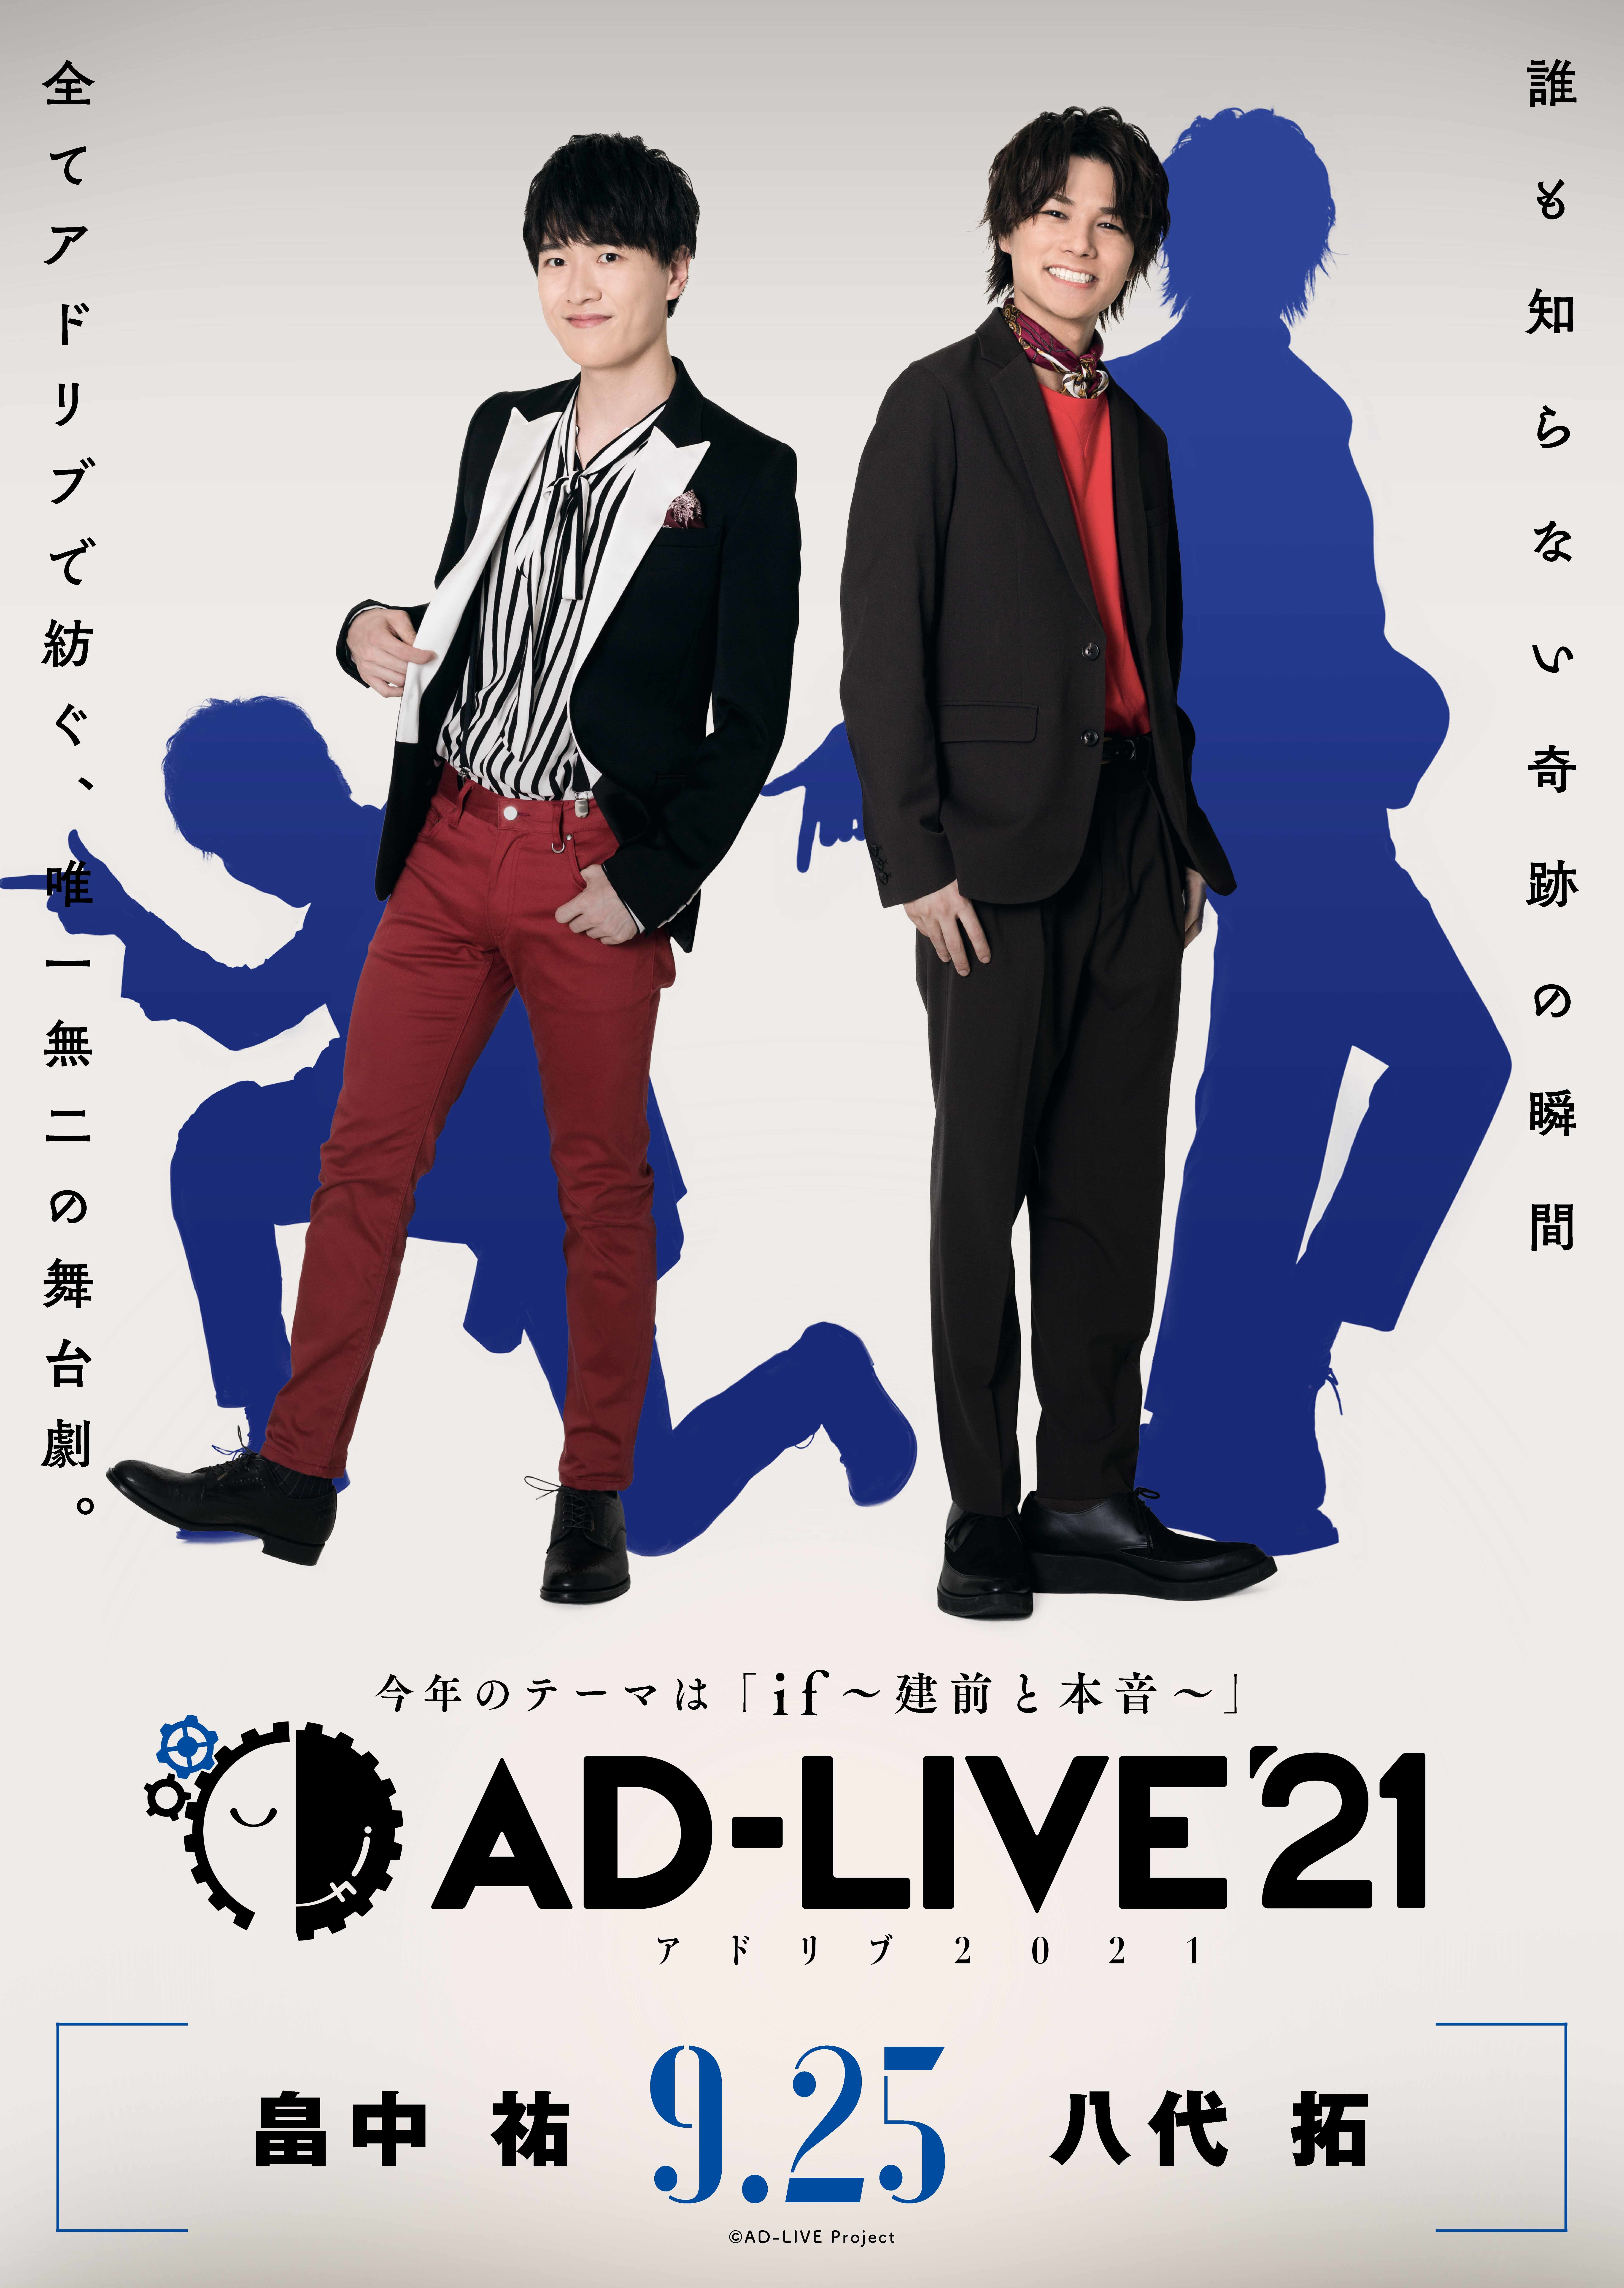 AD-LIVE 2021』キャスト＆テーマが解禁 杉田智和・諏訪部順一・畠中 祐 